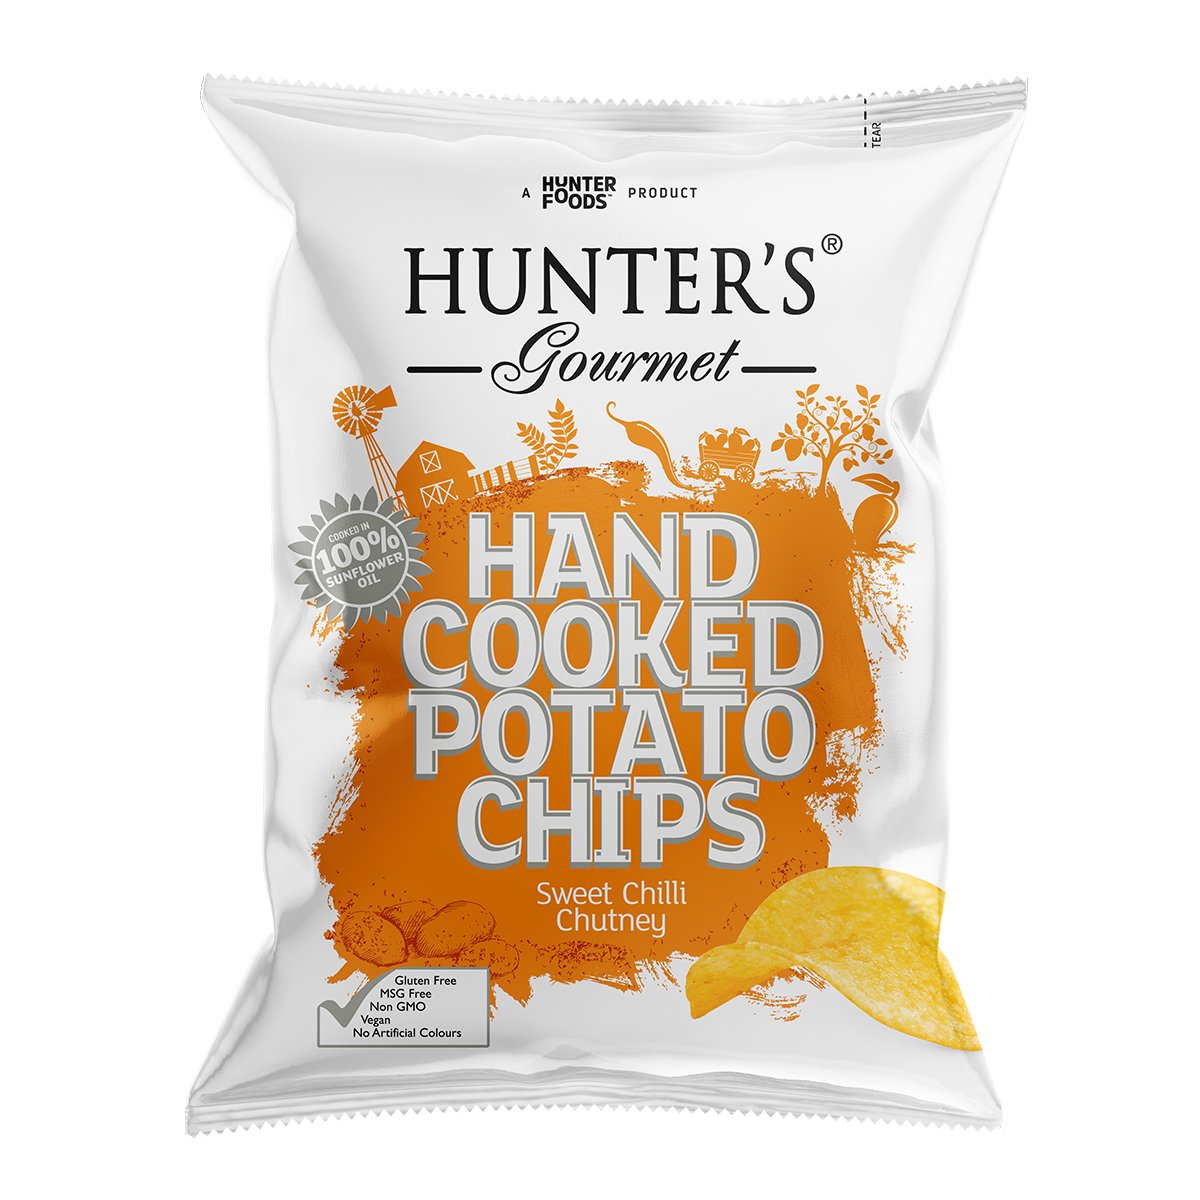 HUNTER'S GOURMET Hand Cooked Potato Chips - Sweet Chilli Chutney, 125g